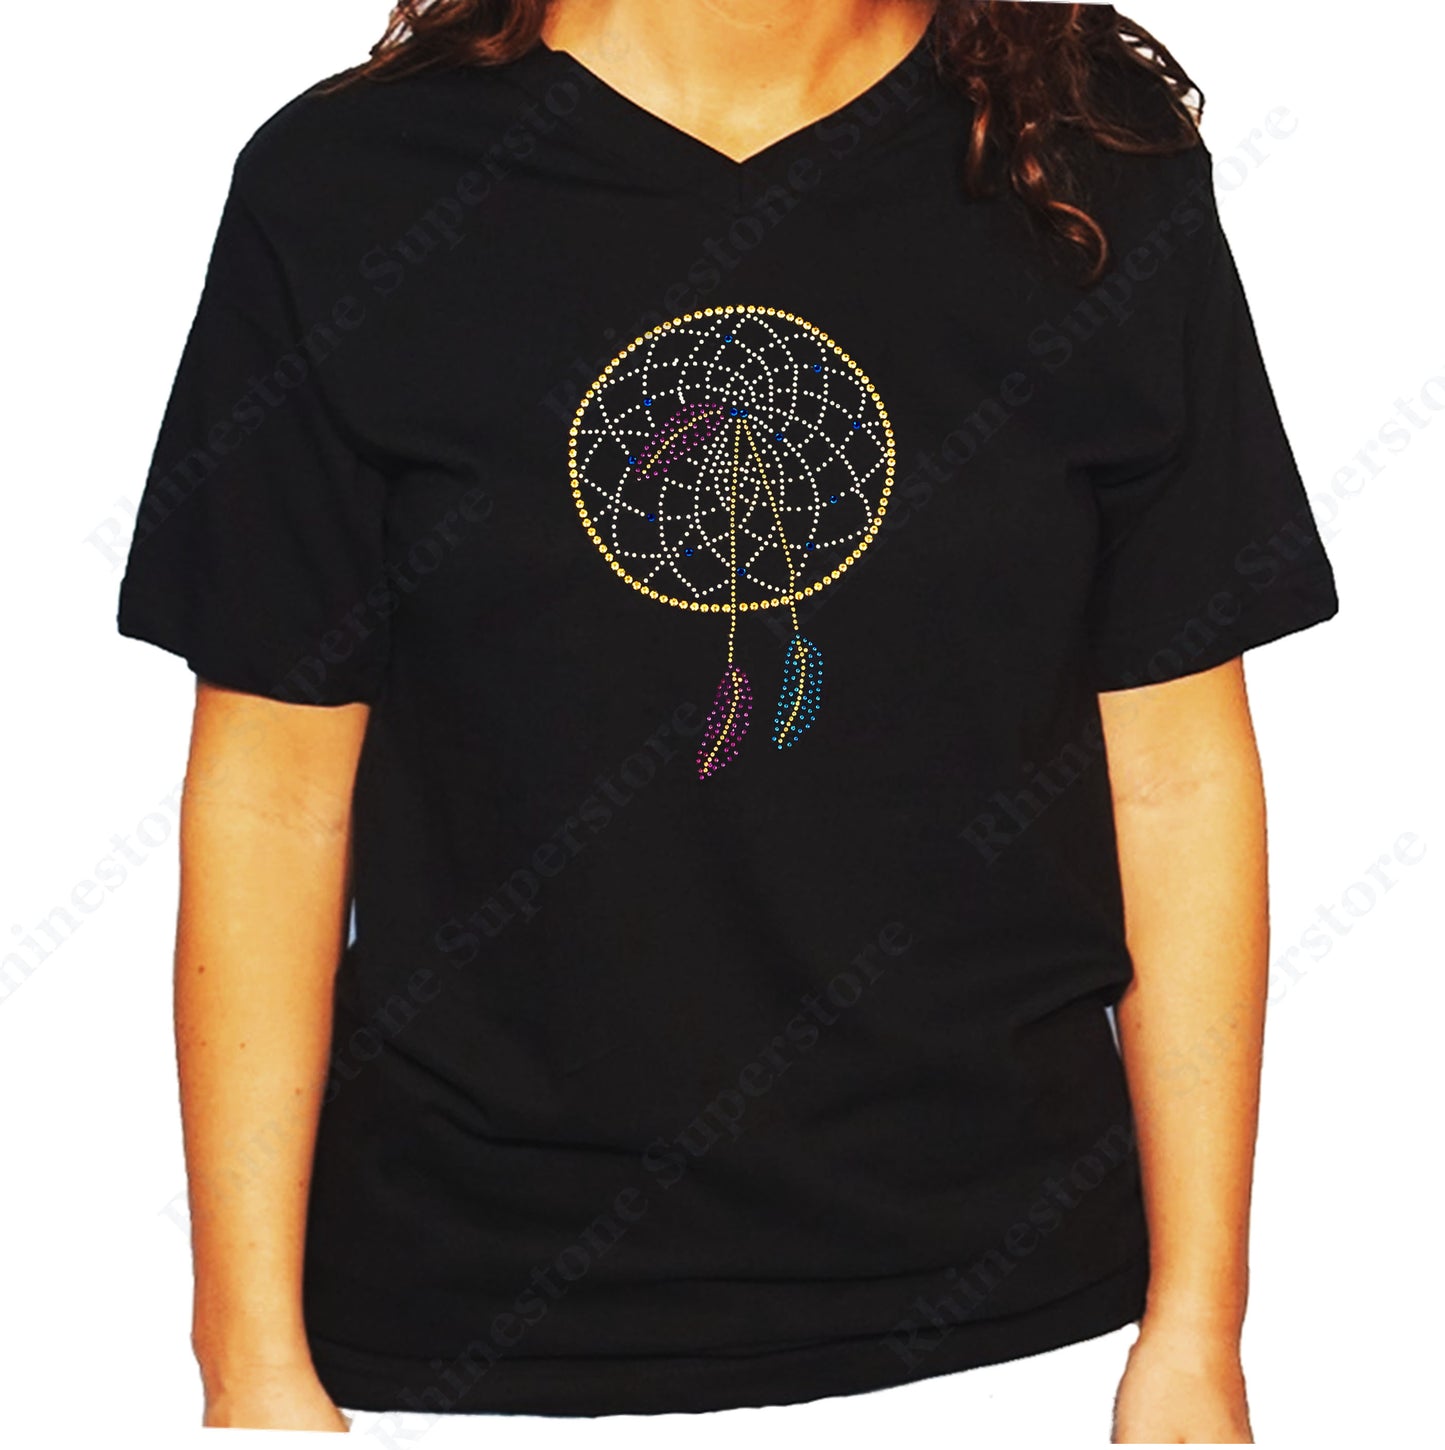 Women's / Unisex T-Shirt with Dream Catcher in Rhinestones